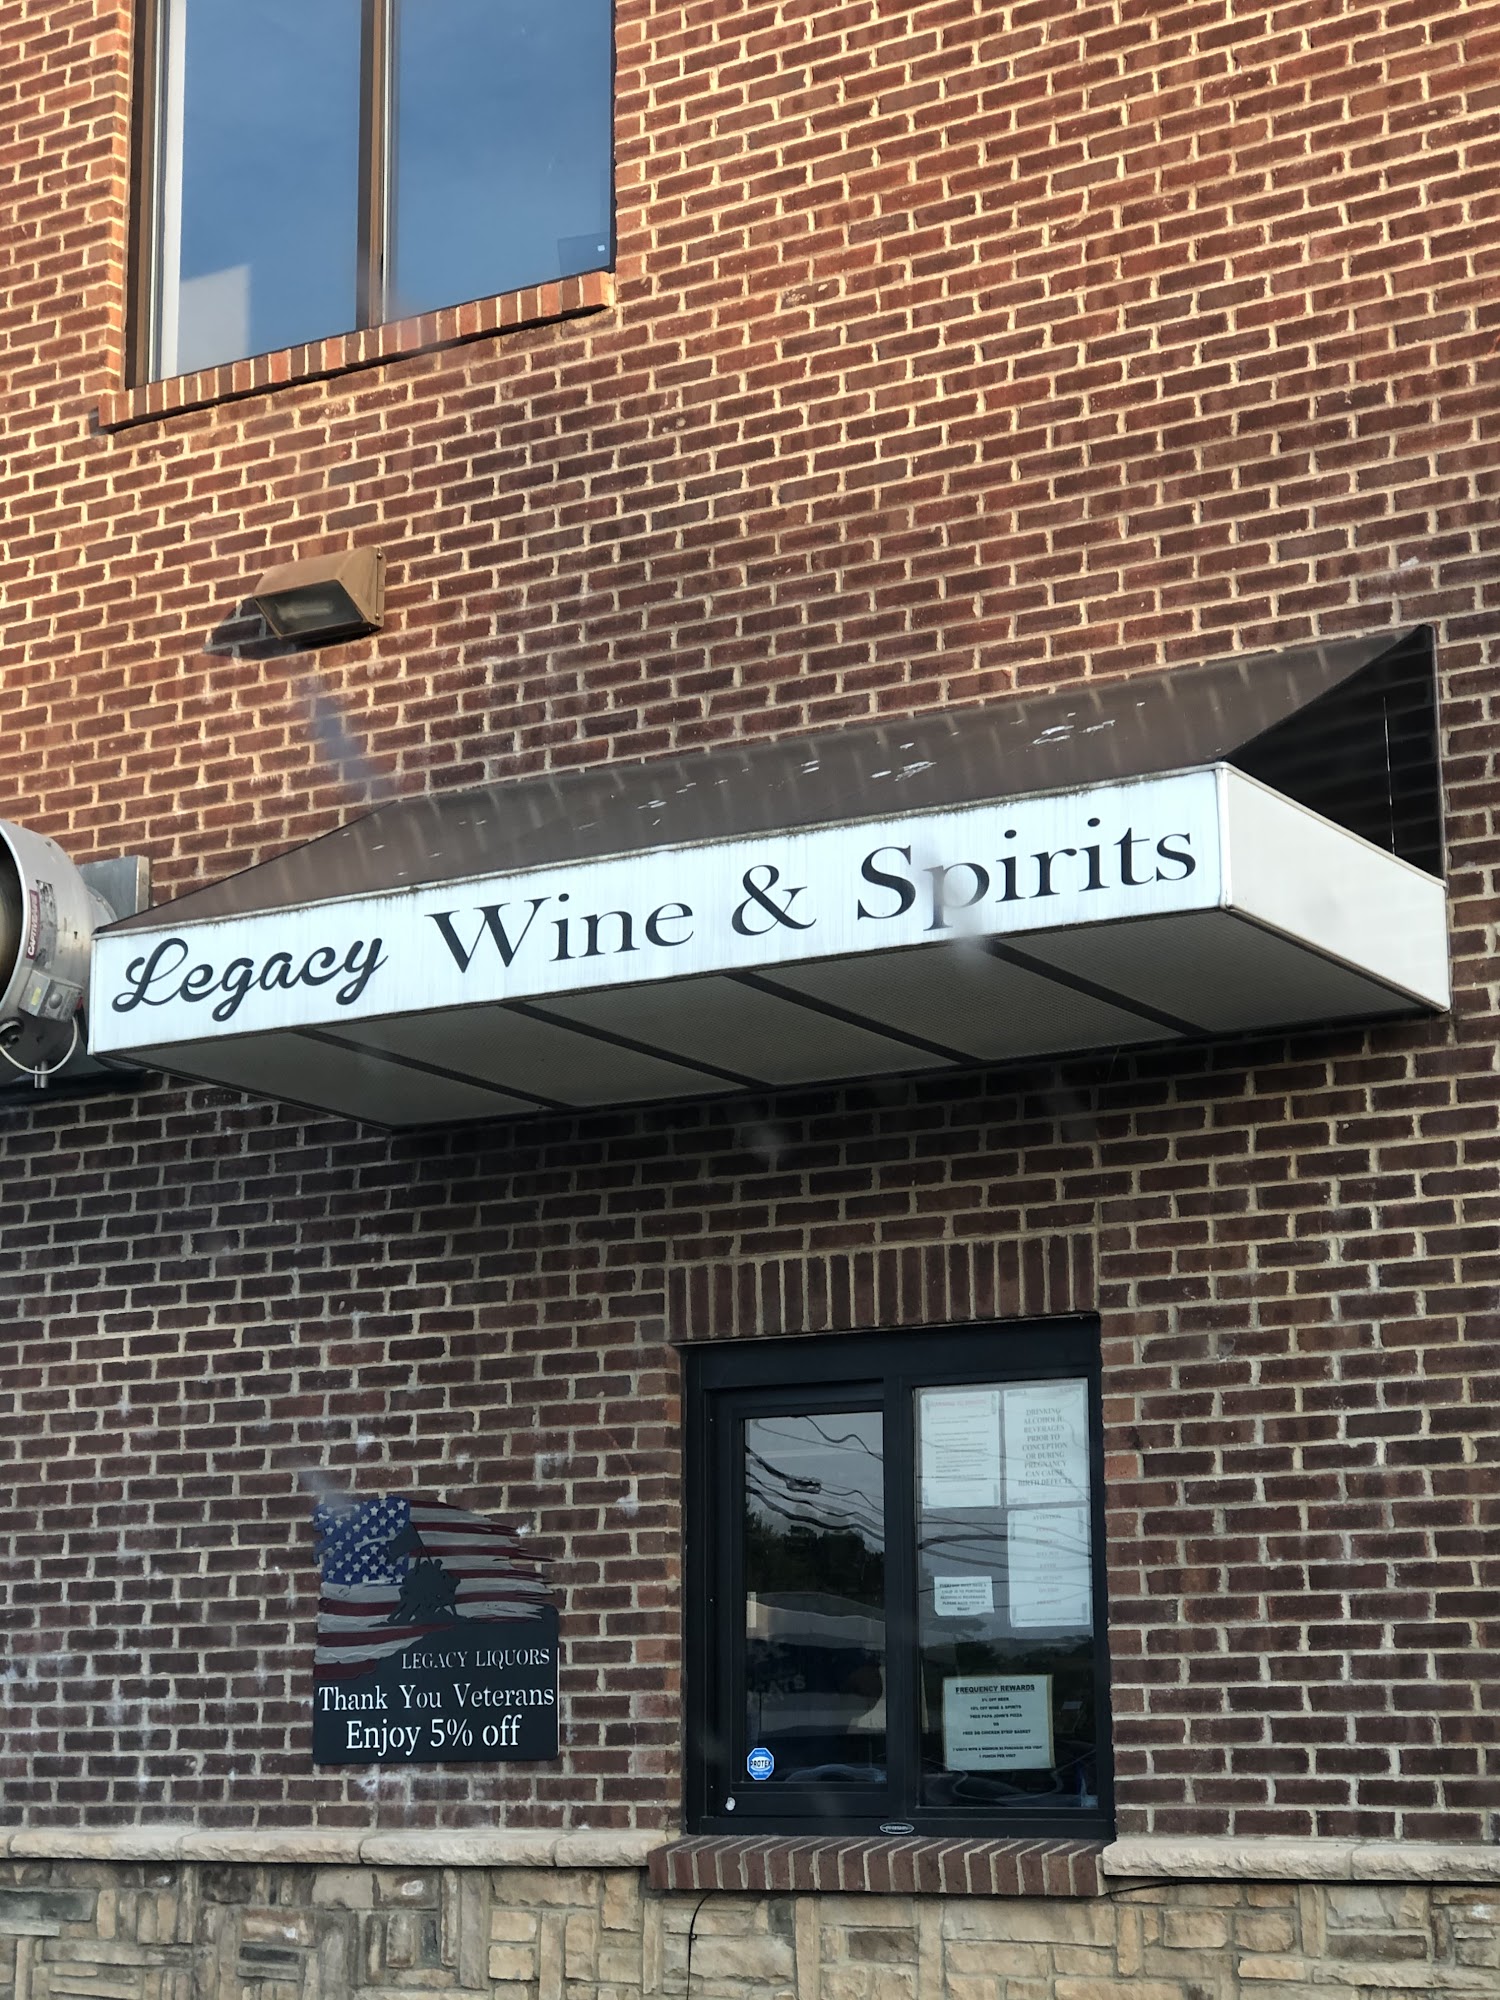 Legacy Liquor Wine and Spirits